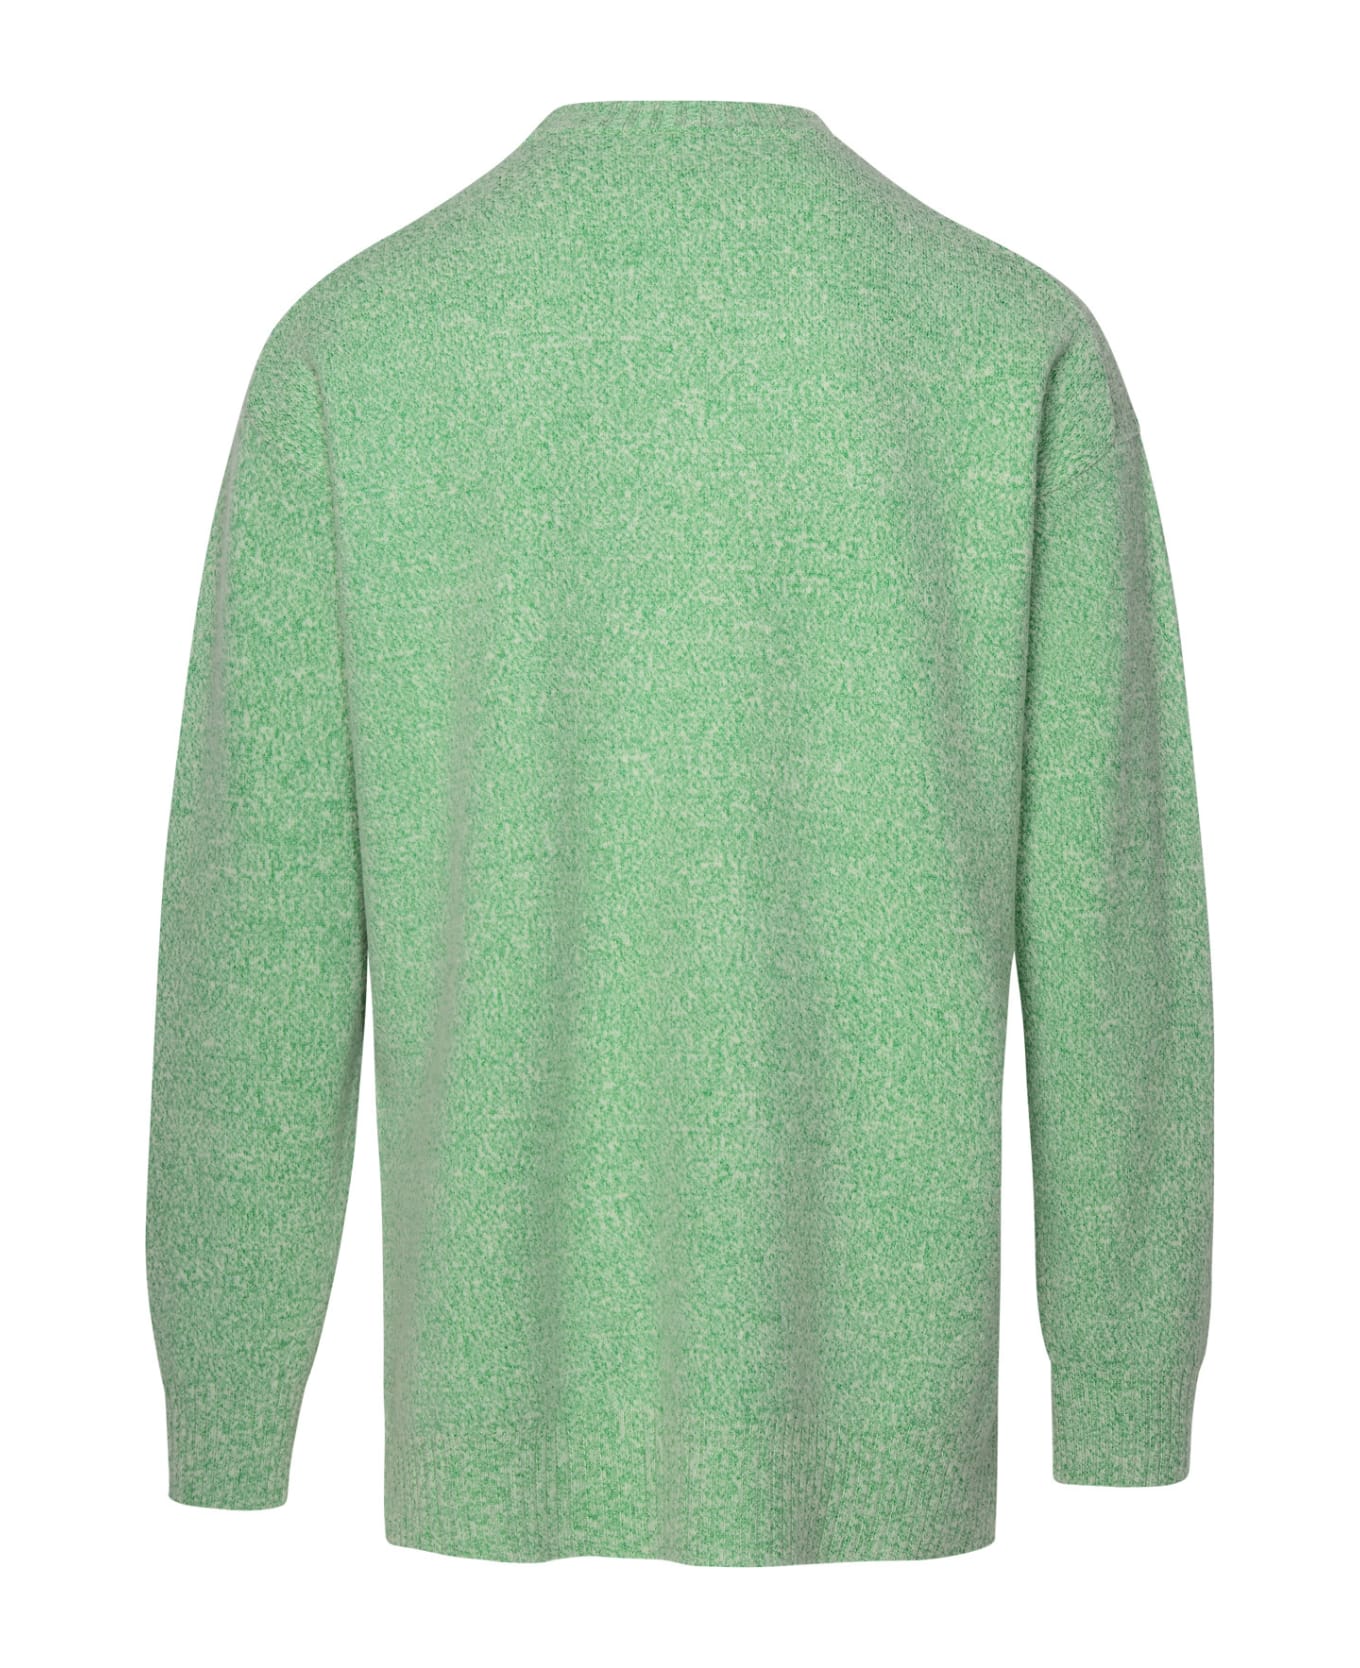 Jil Sander Green Wool Blend Sweater - Green